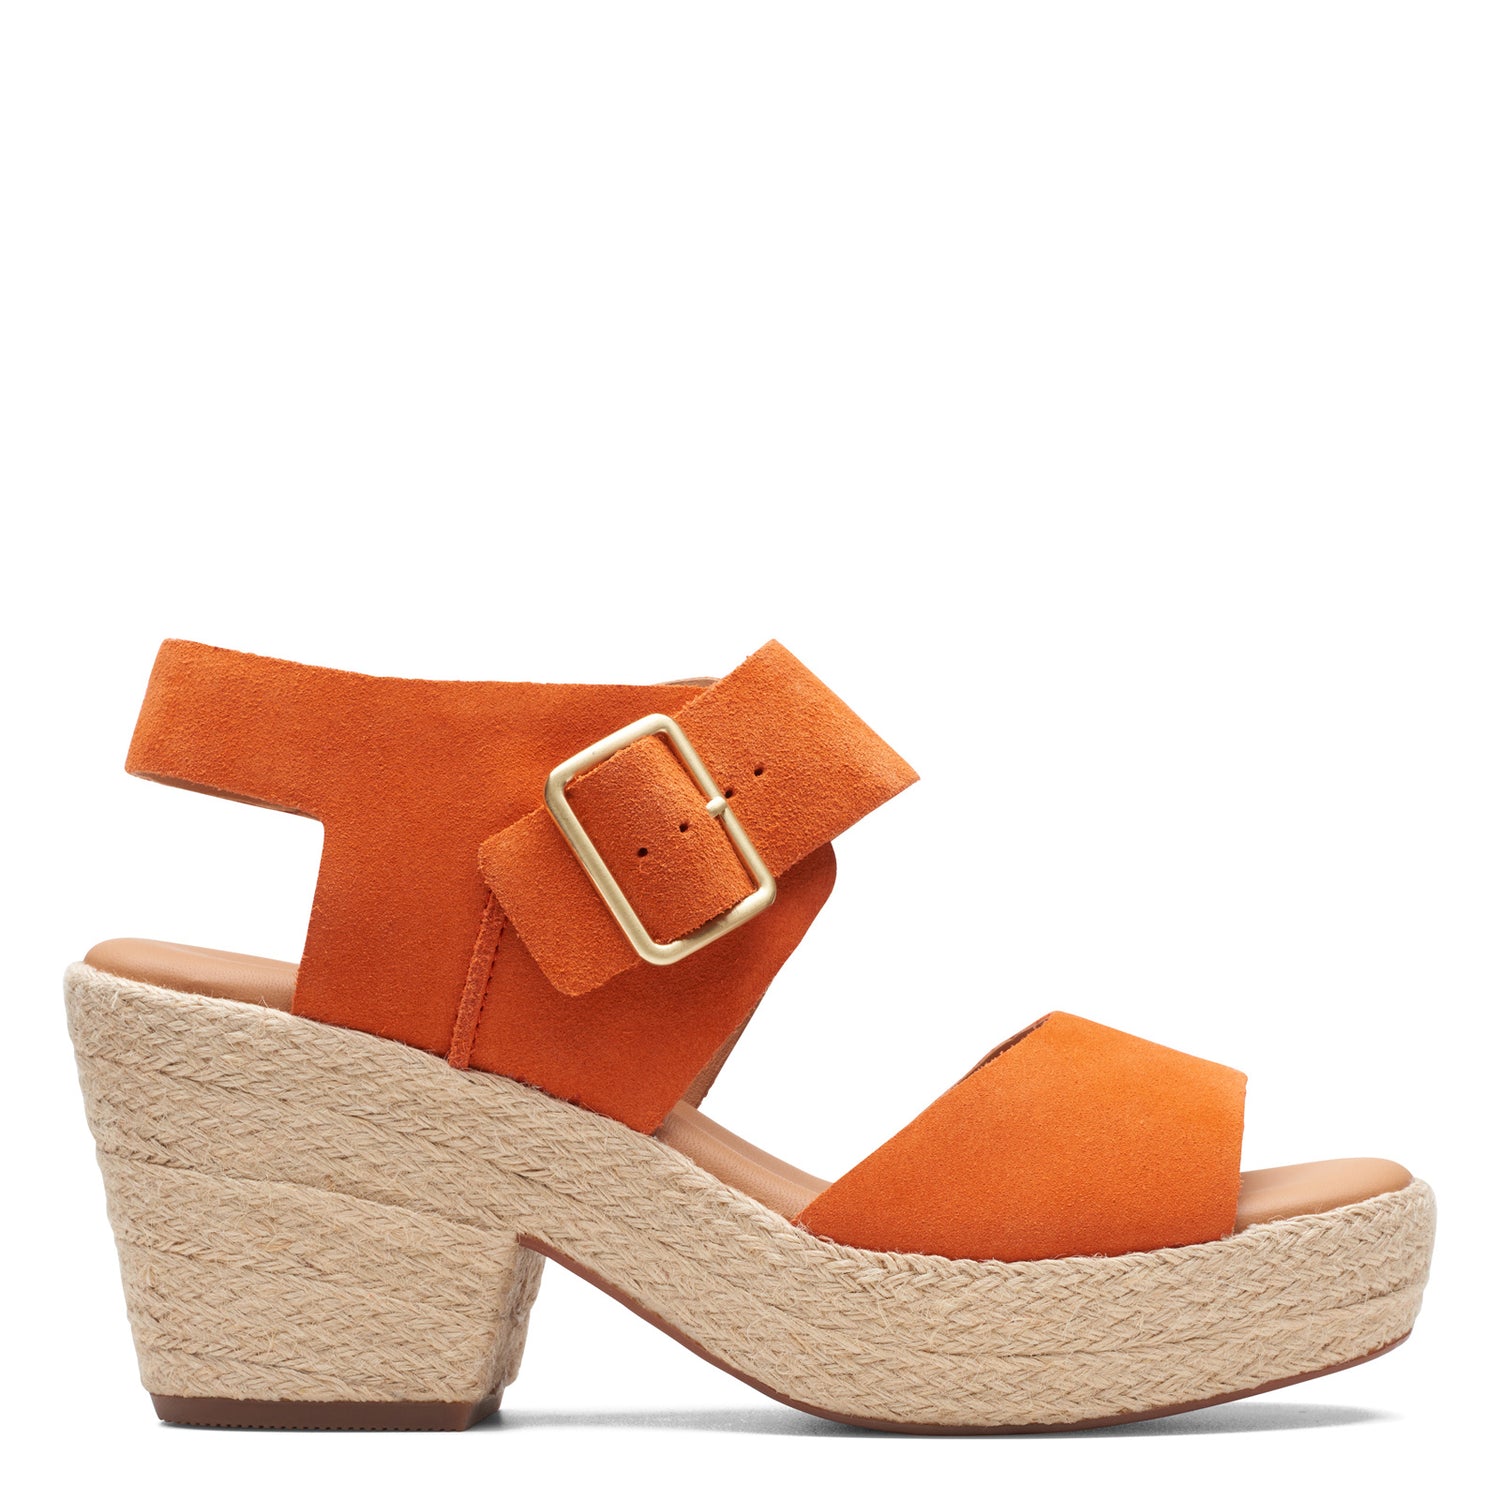 Peltz Shoes  Women's Clarks Kimmei Hi Strap Sandal orange 26171010